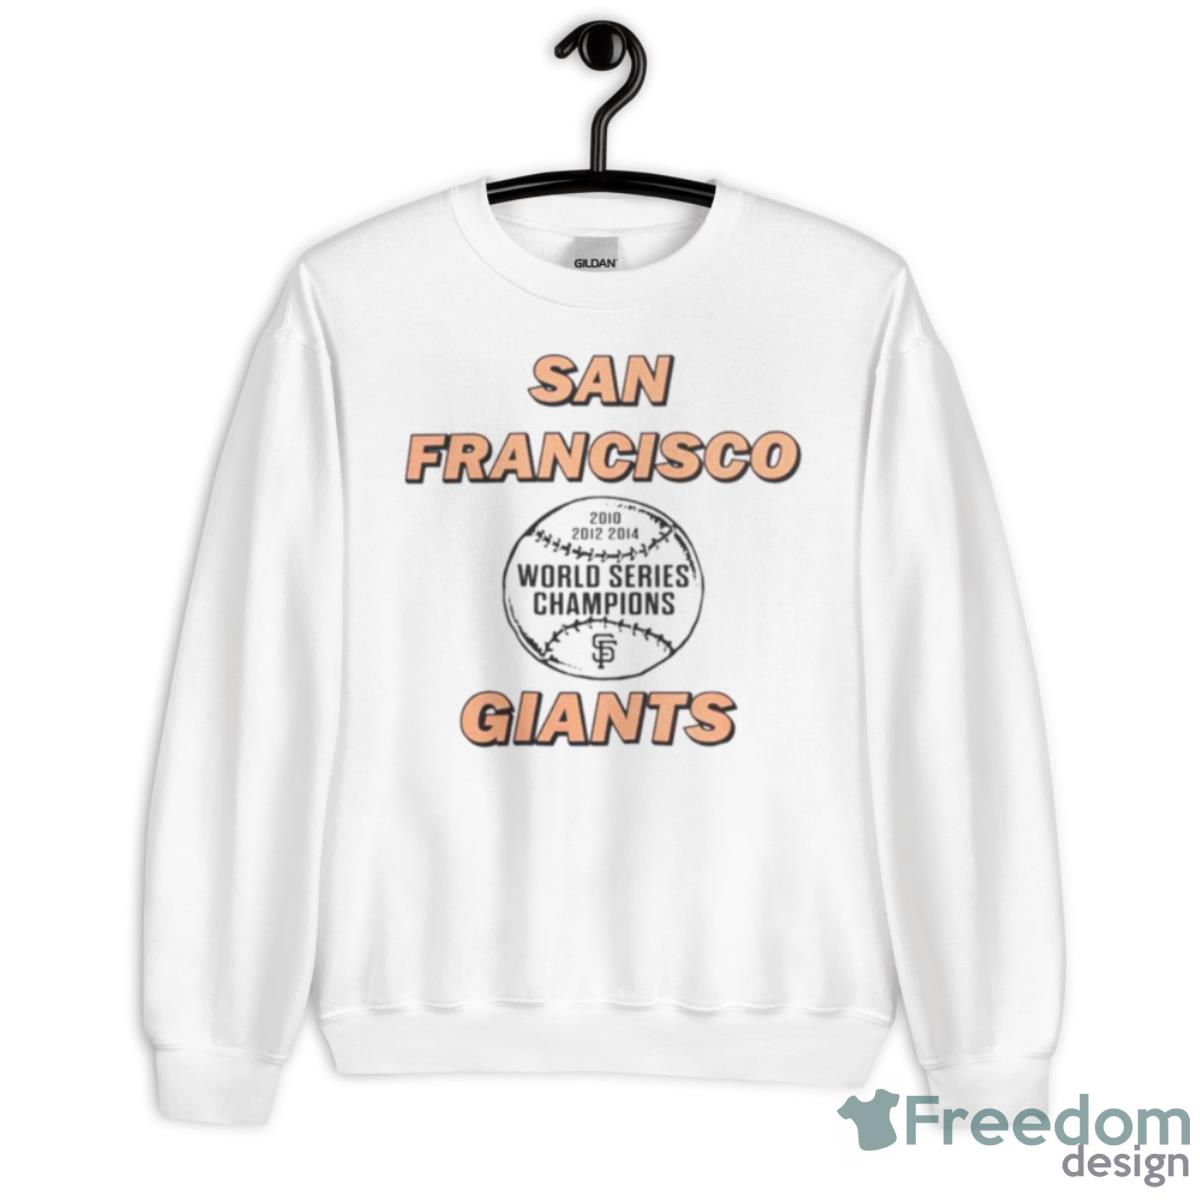 SF Giants - World Series Champions - 2010 - 2012 - 2014!!